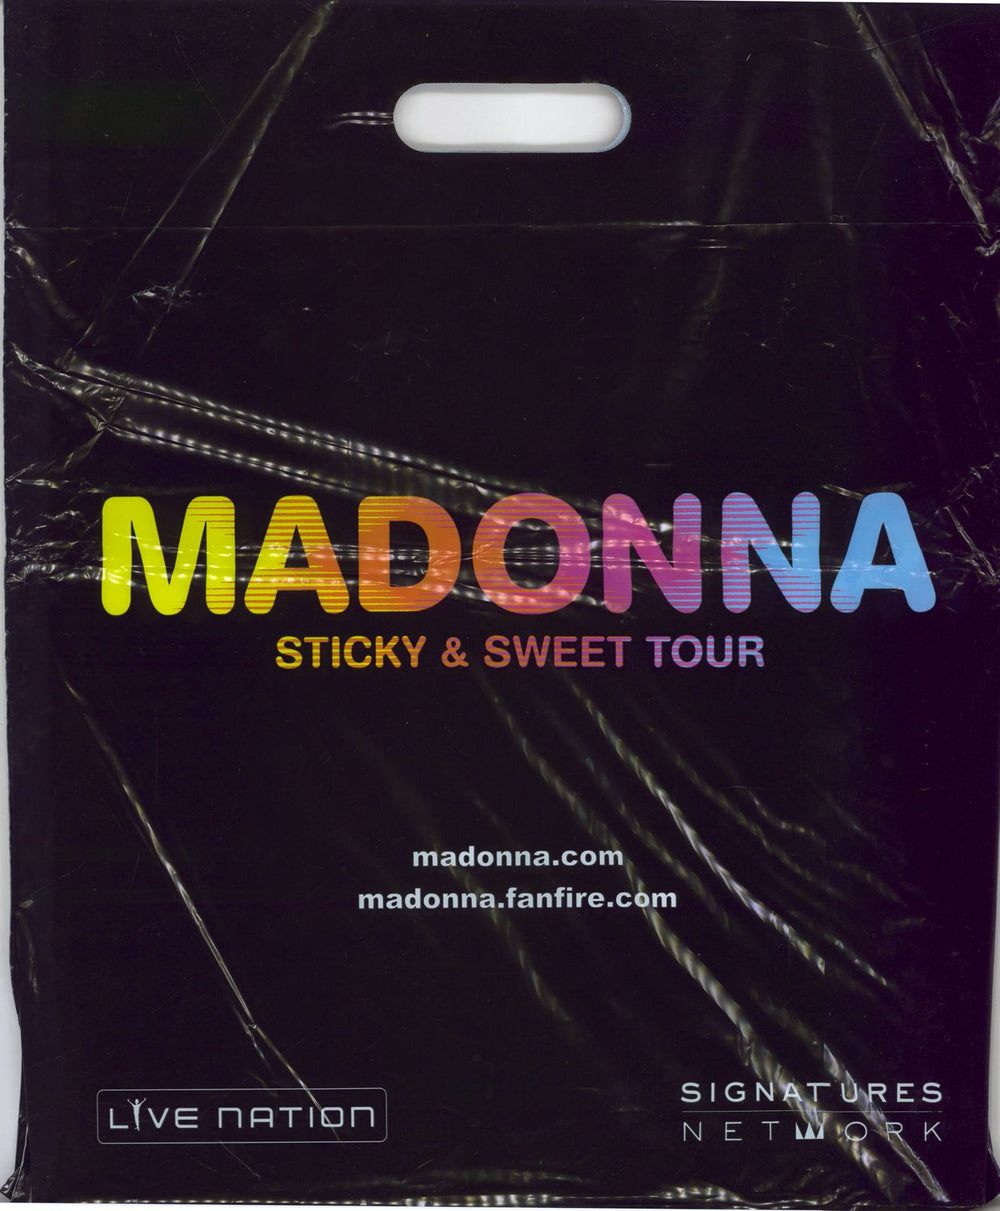 Madonna Sticky & Sweet Tour - 1st leg + Carrier bag & Souvenir Ticket stub UK tour programme